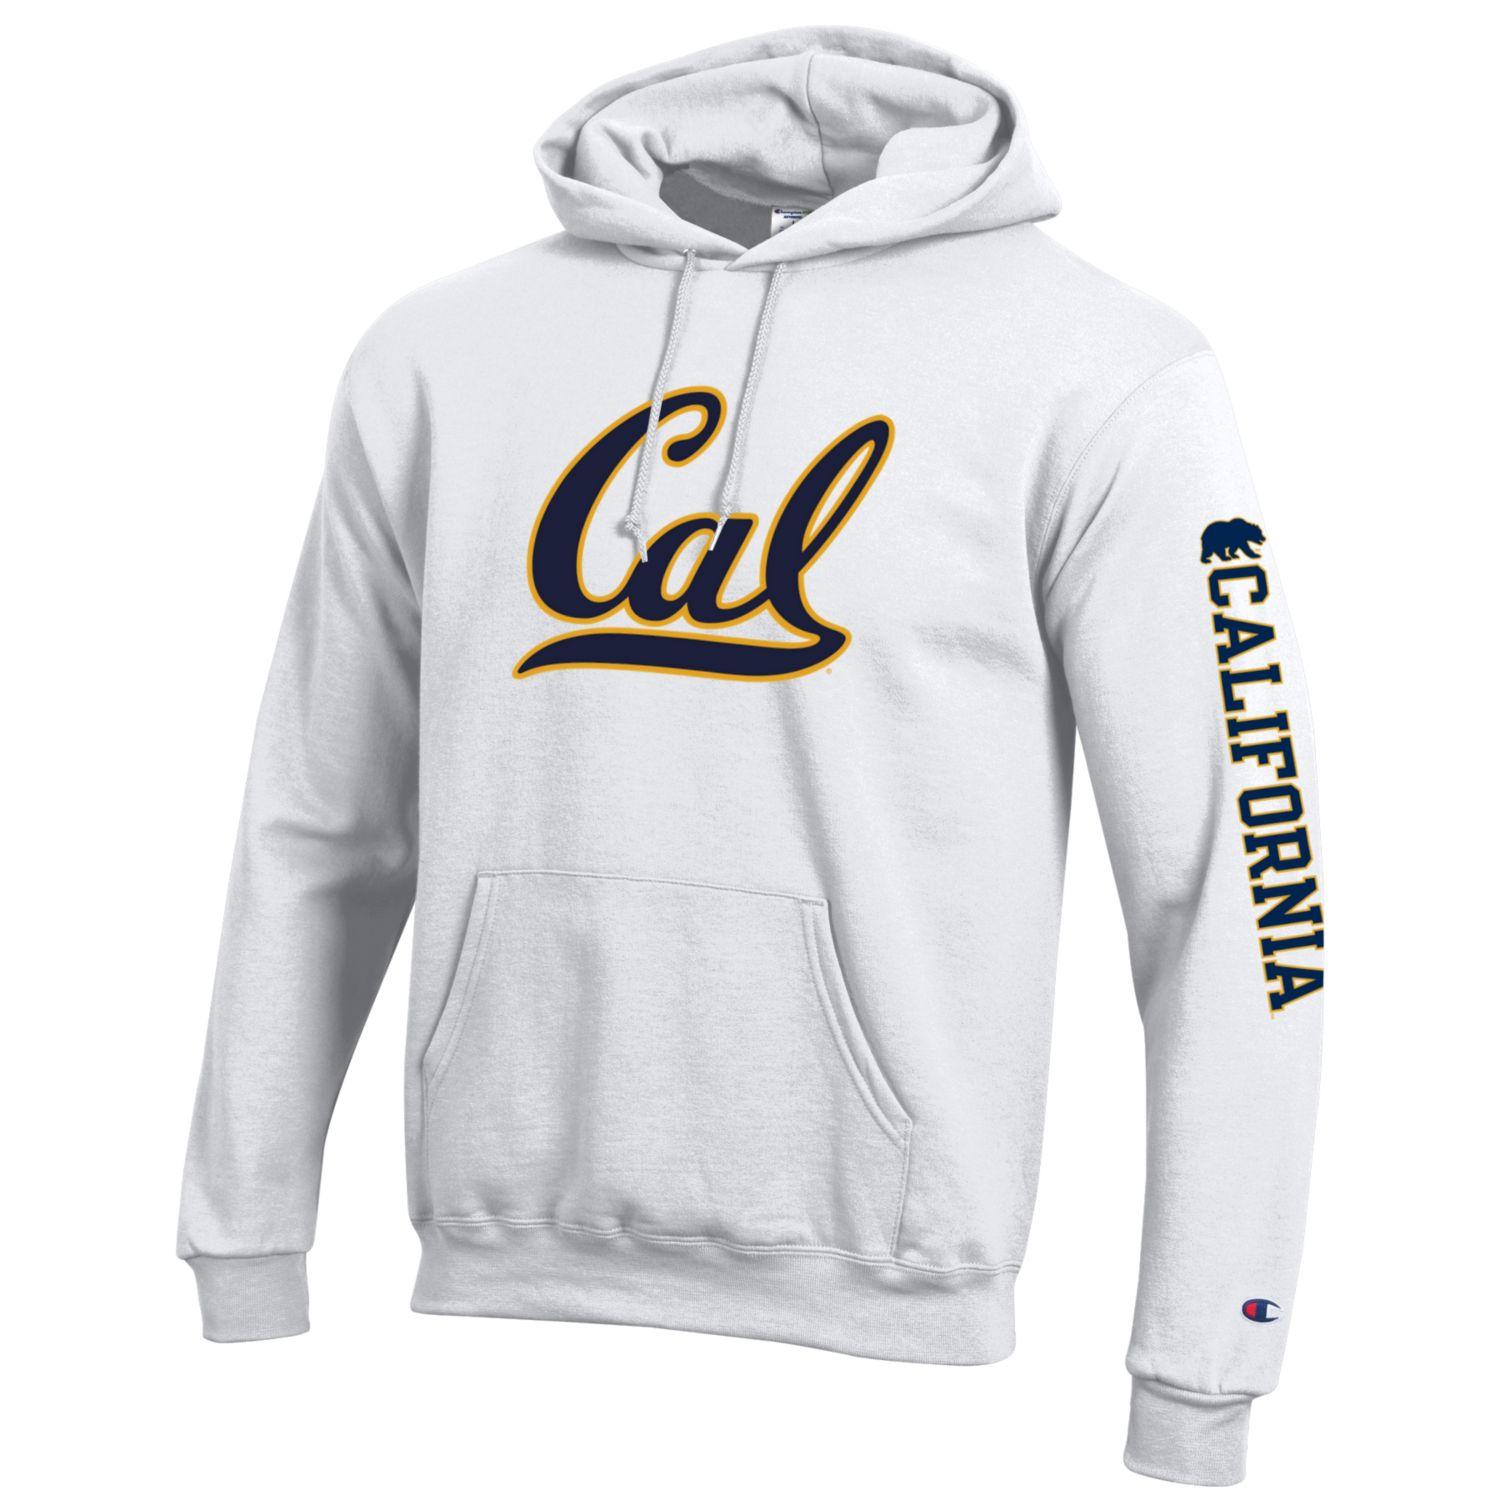 U.C. Berkeley Cal Script Bold Champion hoodie sweatshirt-White – Shop College